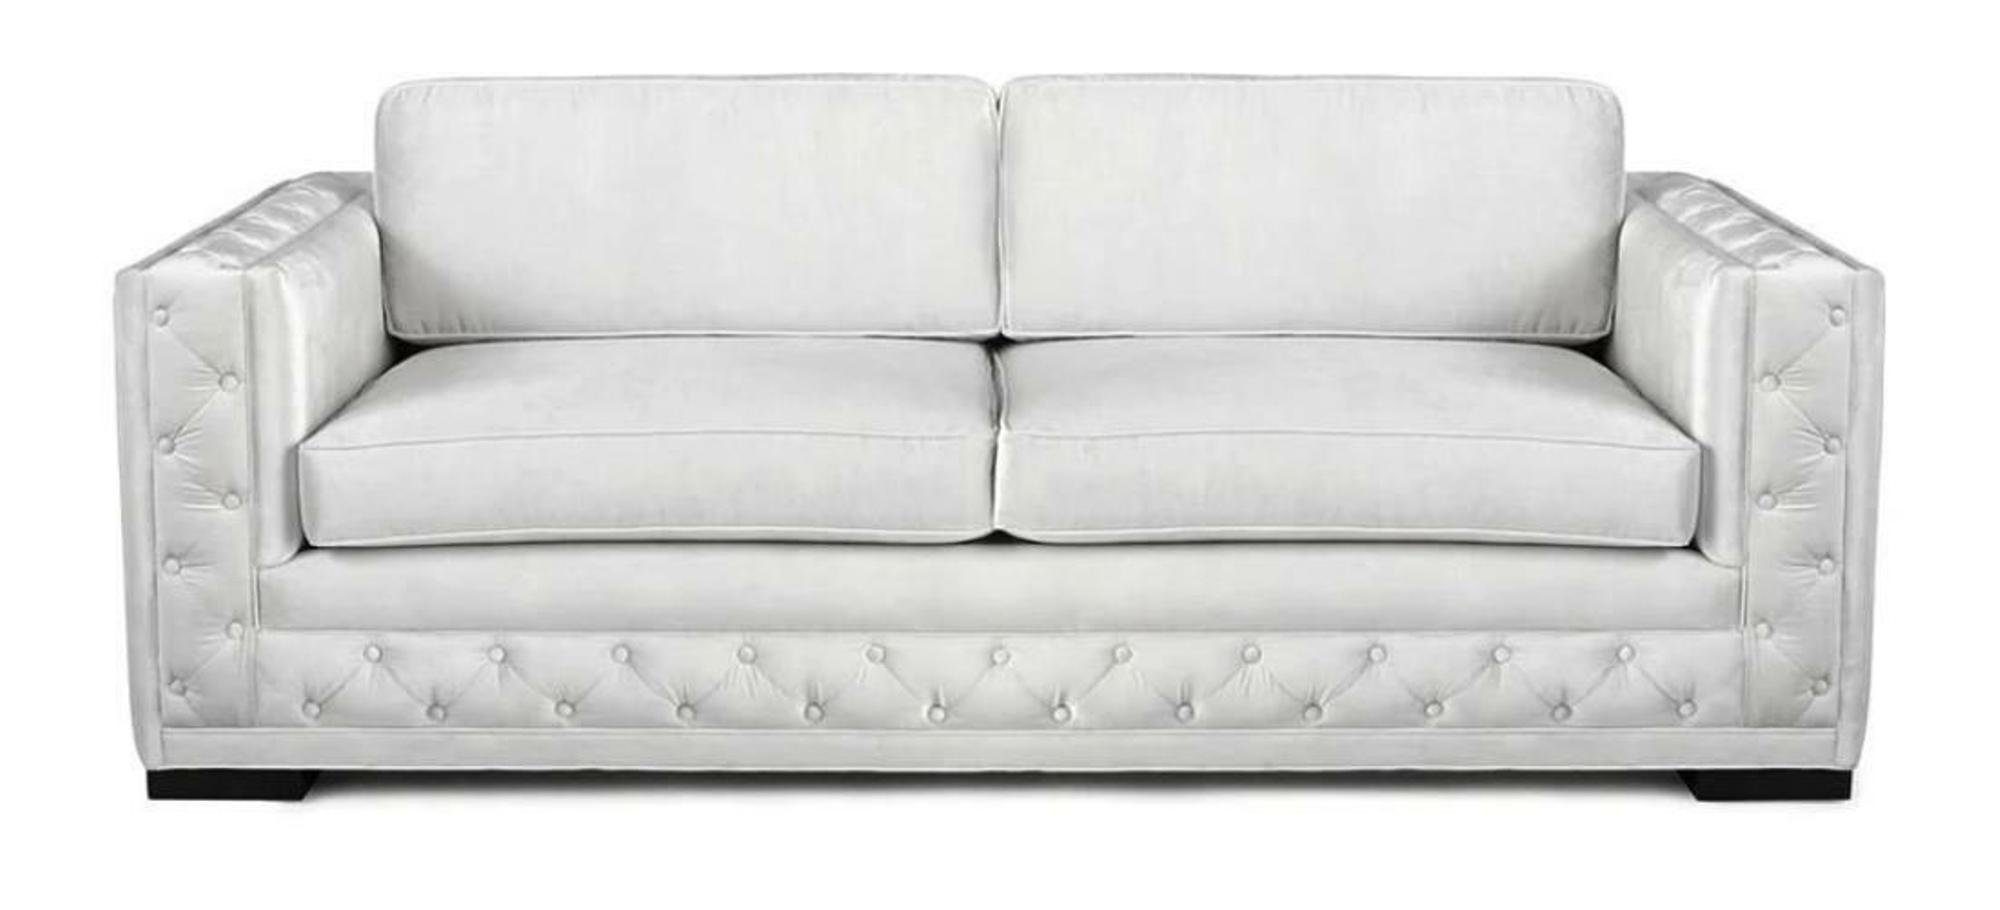 Kreative JVmoebel Textil Modern Sofa Chesterfield Couchen Chesterfield-Sofa, Möbel Weiß Design Neu